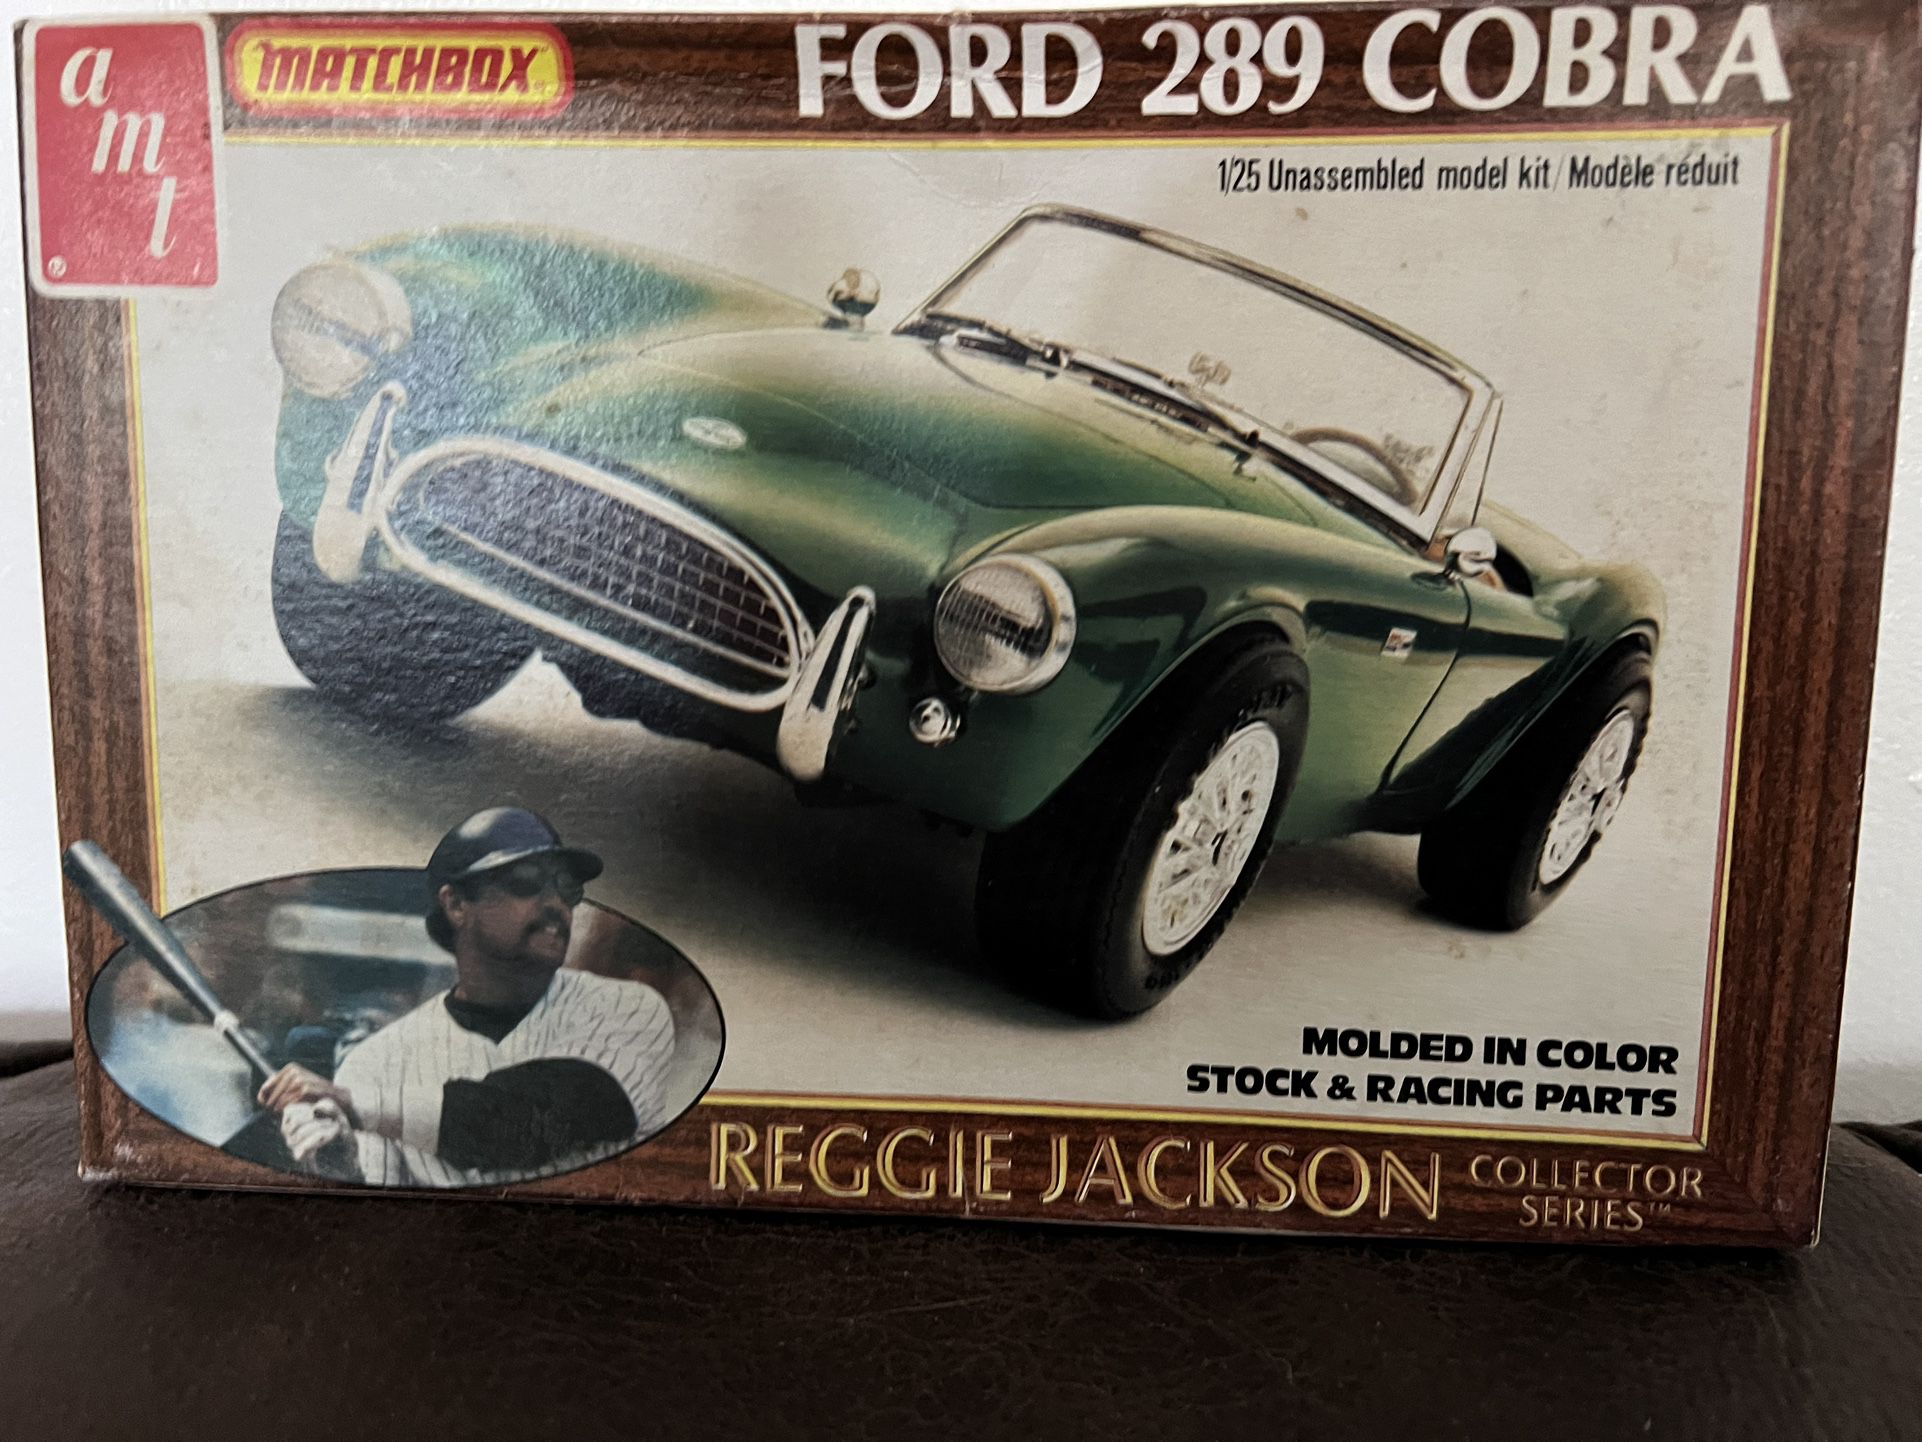 AMT Reggie Jackson Collection 289 Ford Model Kit